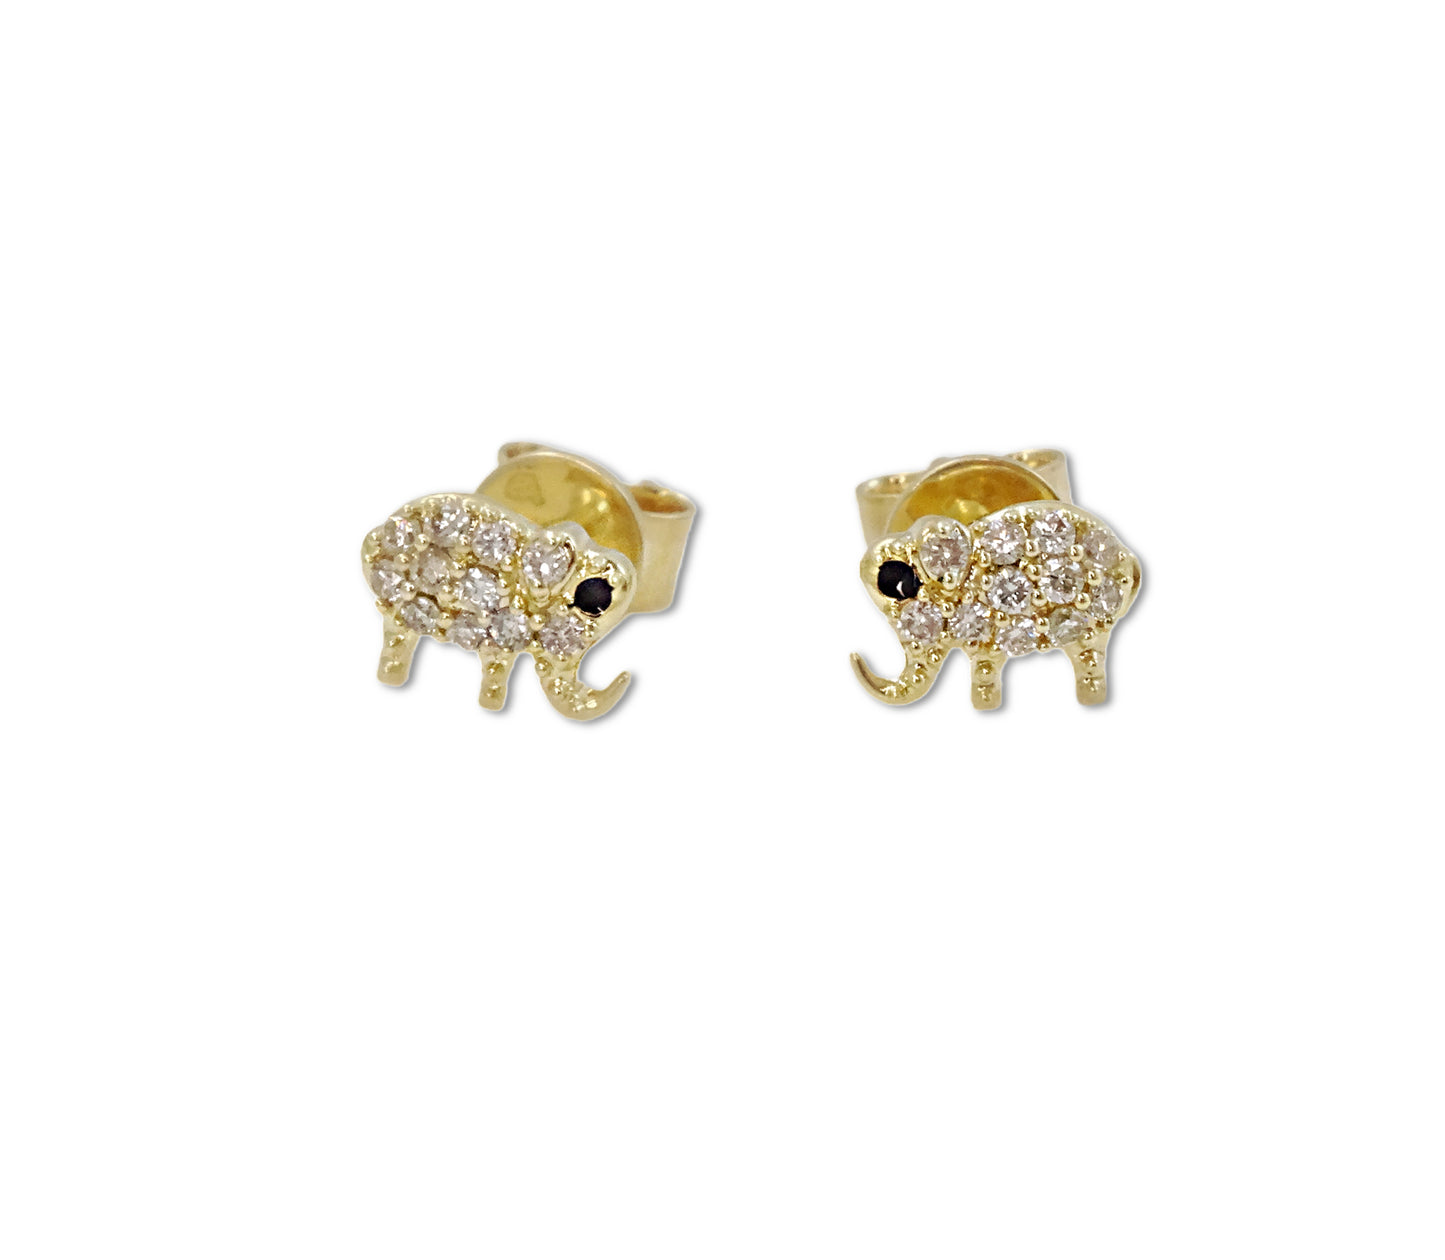 14K Gold Miniature Diamond Elephant Gift Set